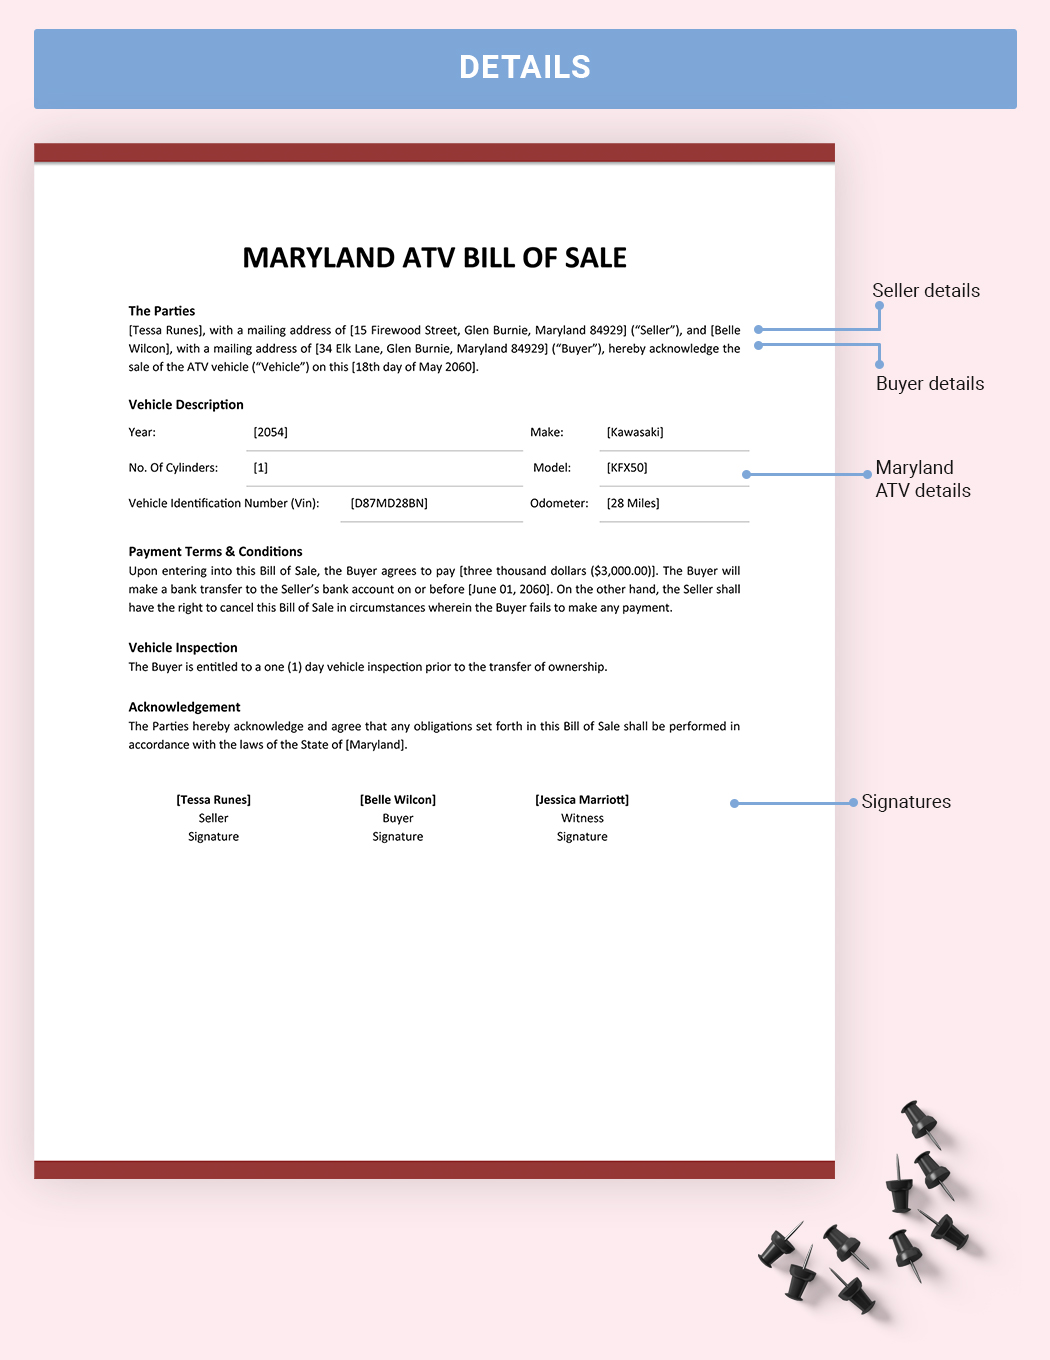 Maryland ATV Bill Of Sale Template